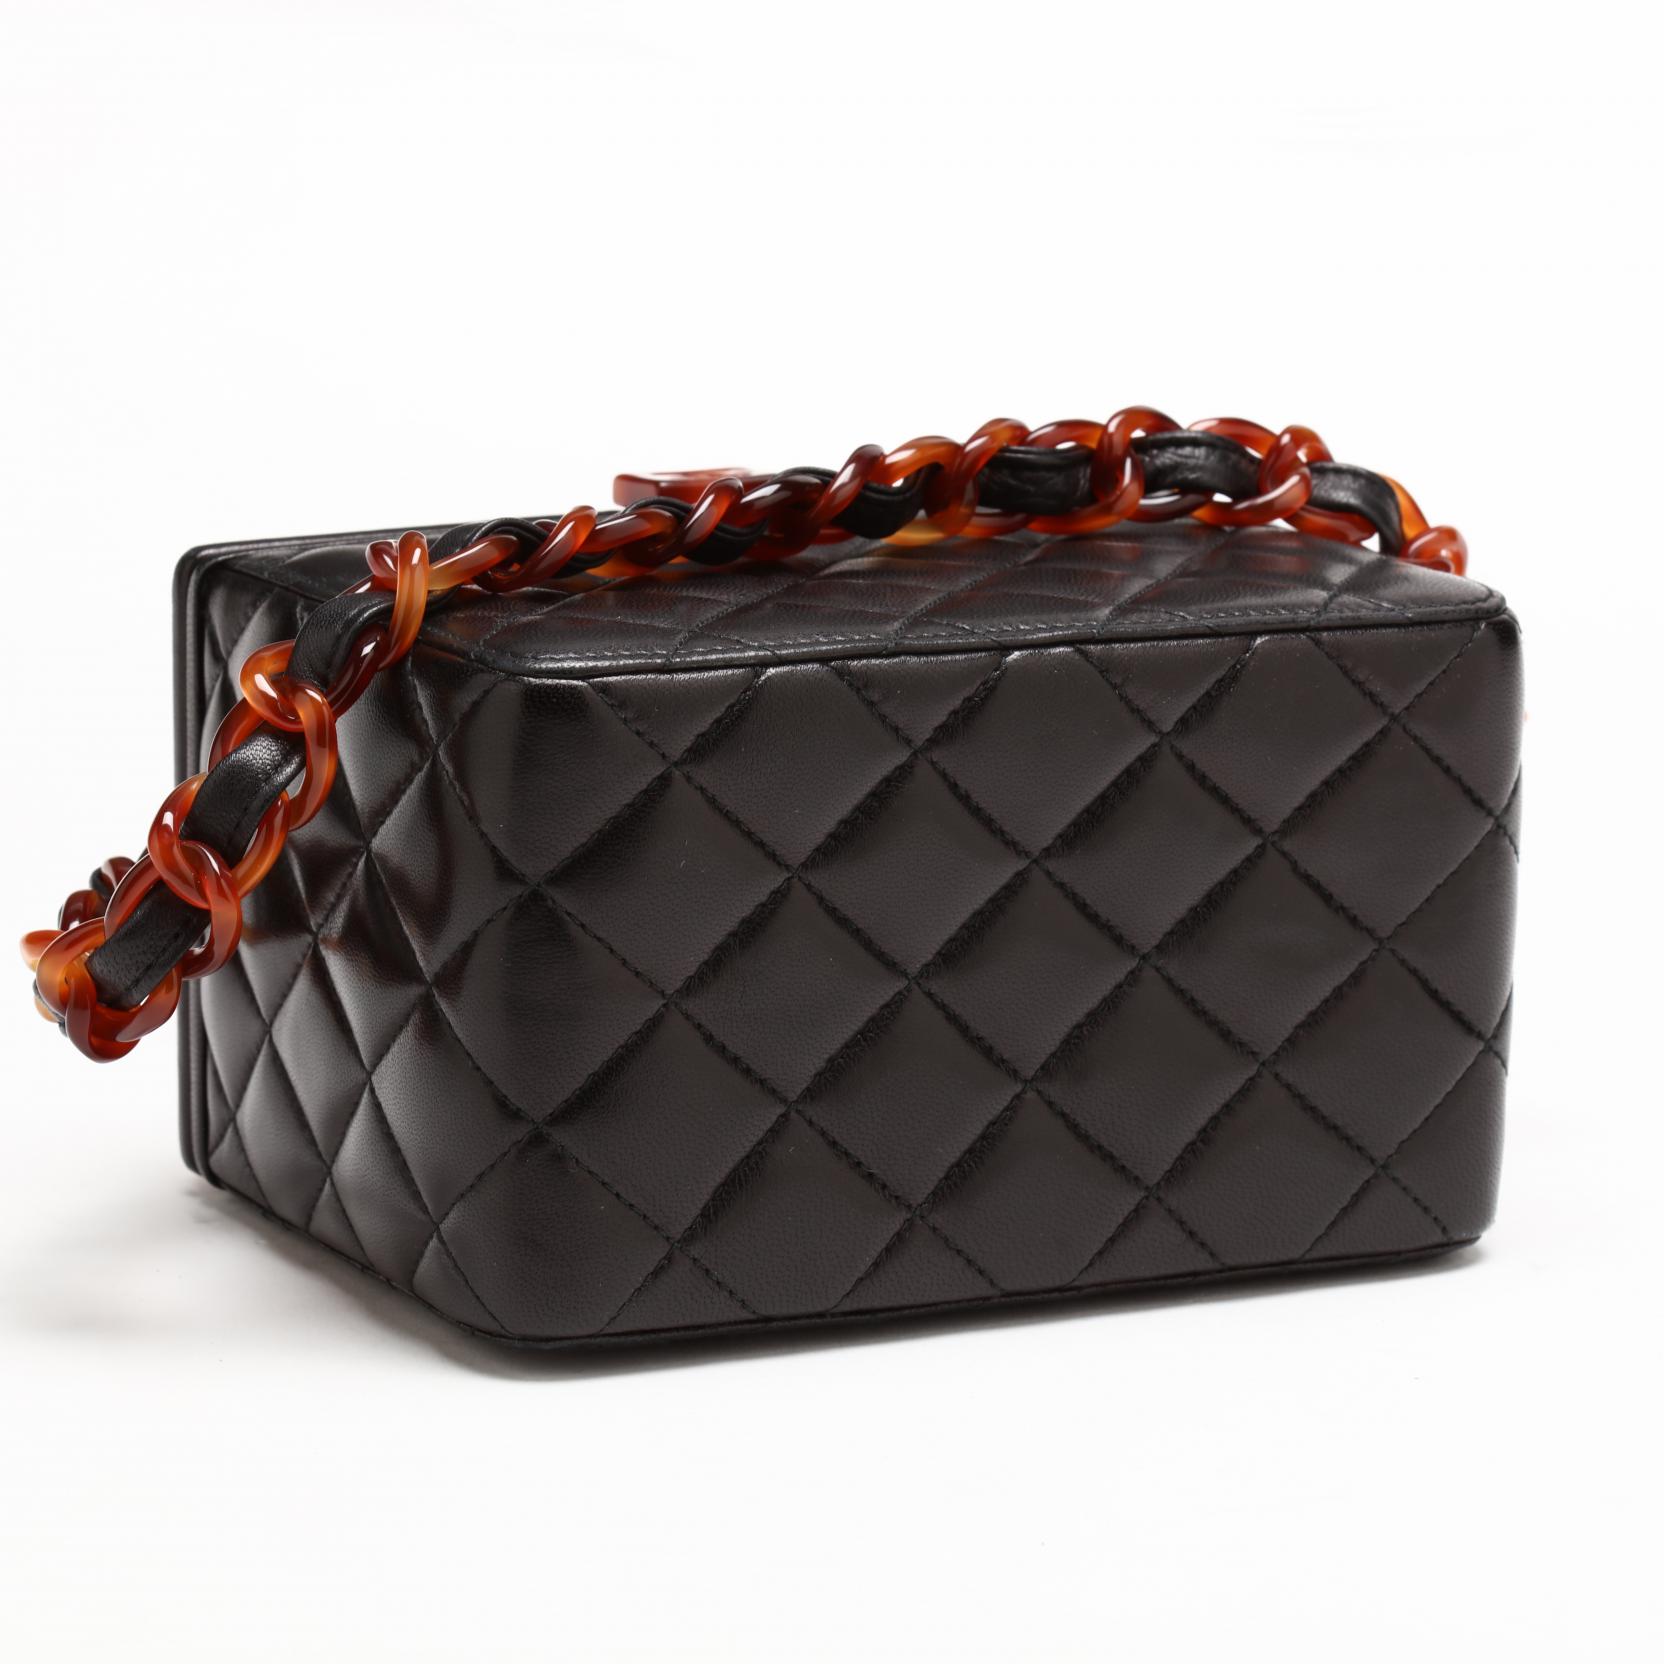 Chanel Beige Suede Vintage Tortoiseshell Flap Chain Bag Chanel